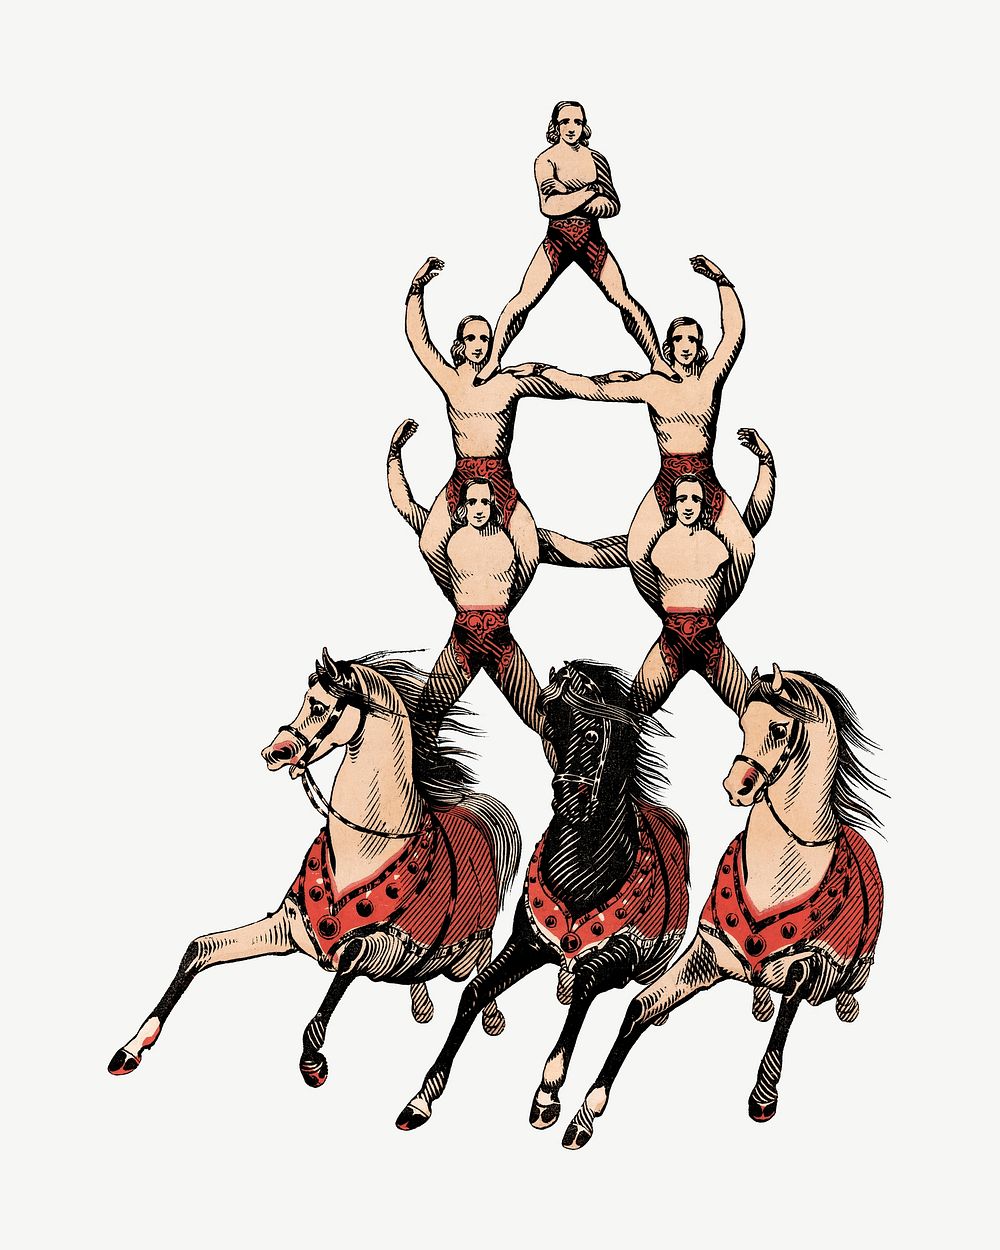 Vintage acrobats on three horses psd. Remixed by rawpixel. 